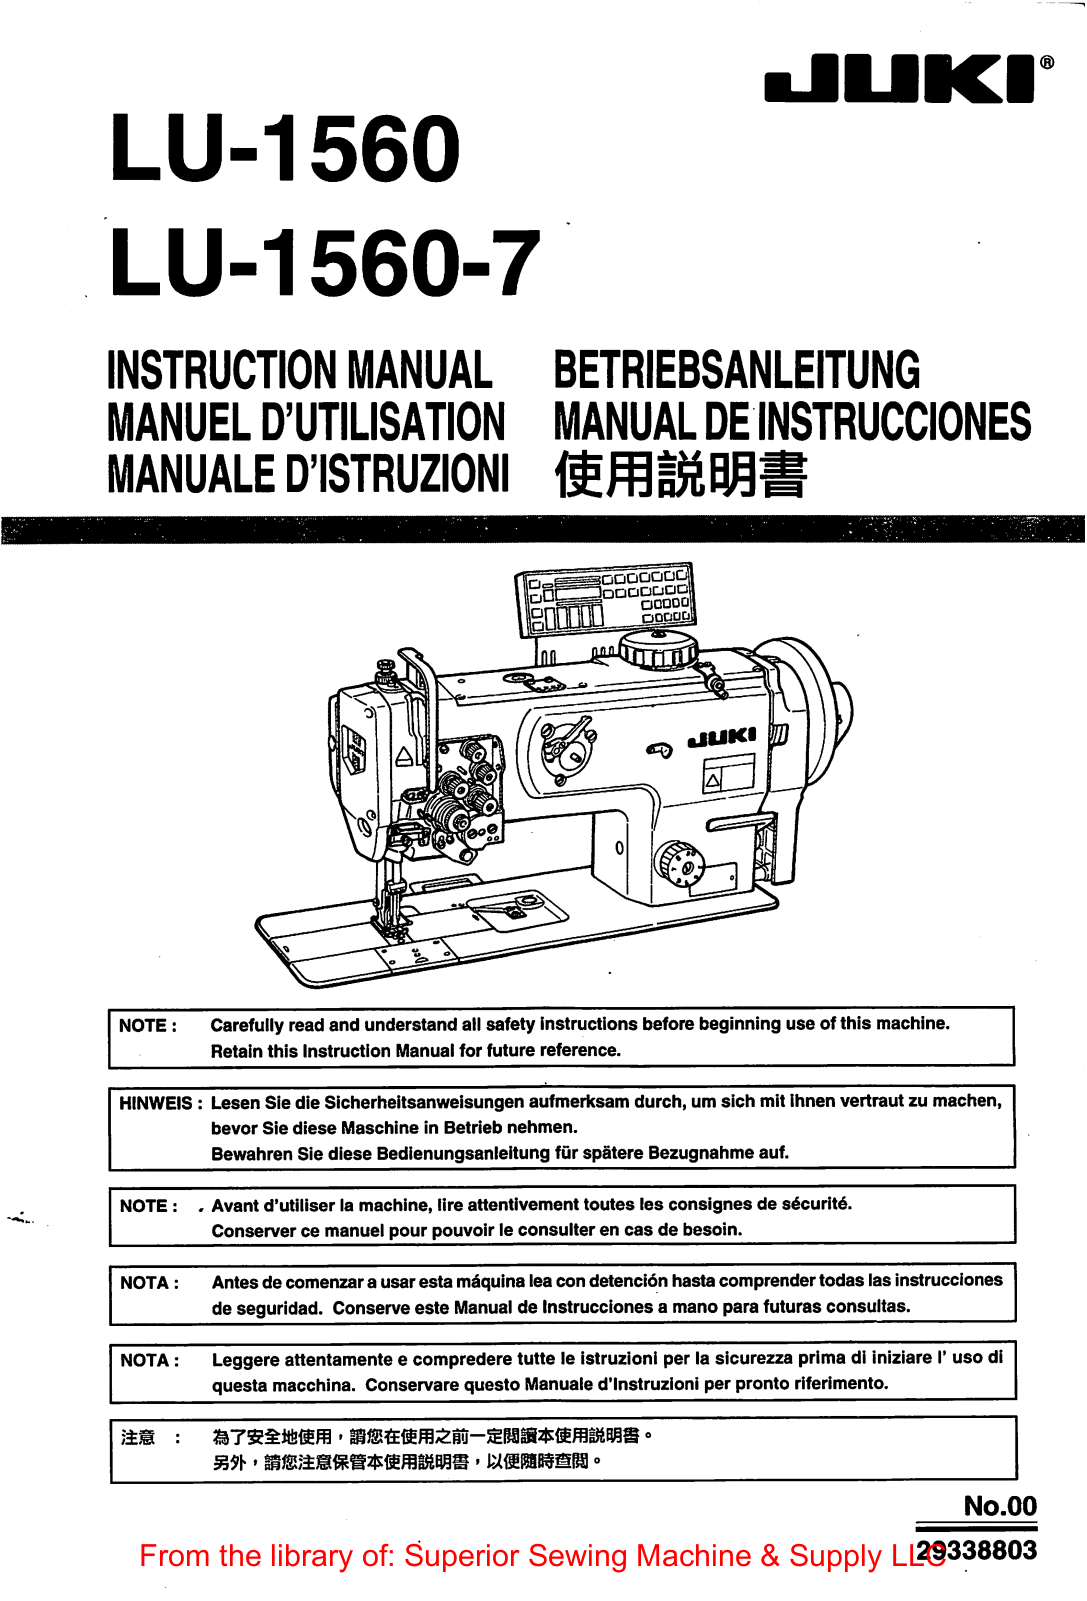 Juki LU-1560, LU-1560-7 Instruction Manual